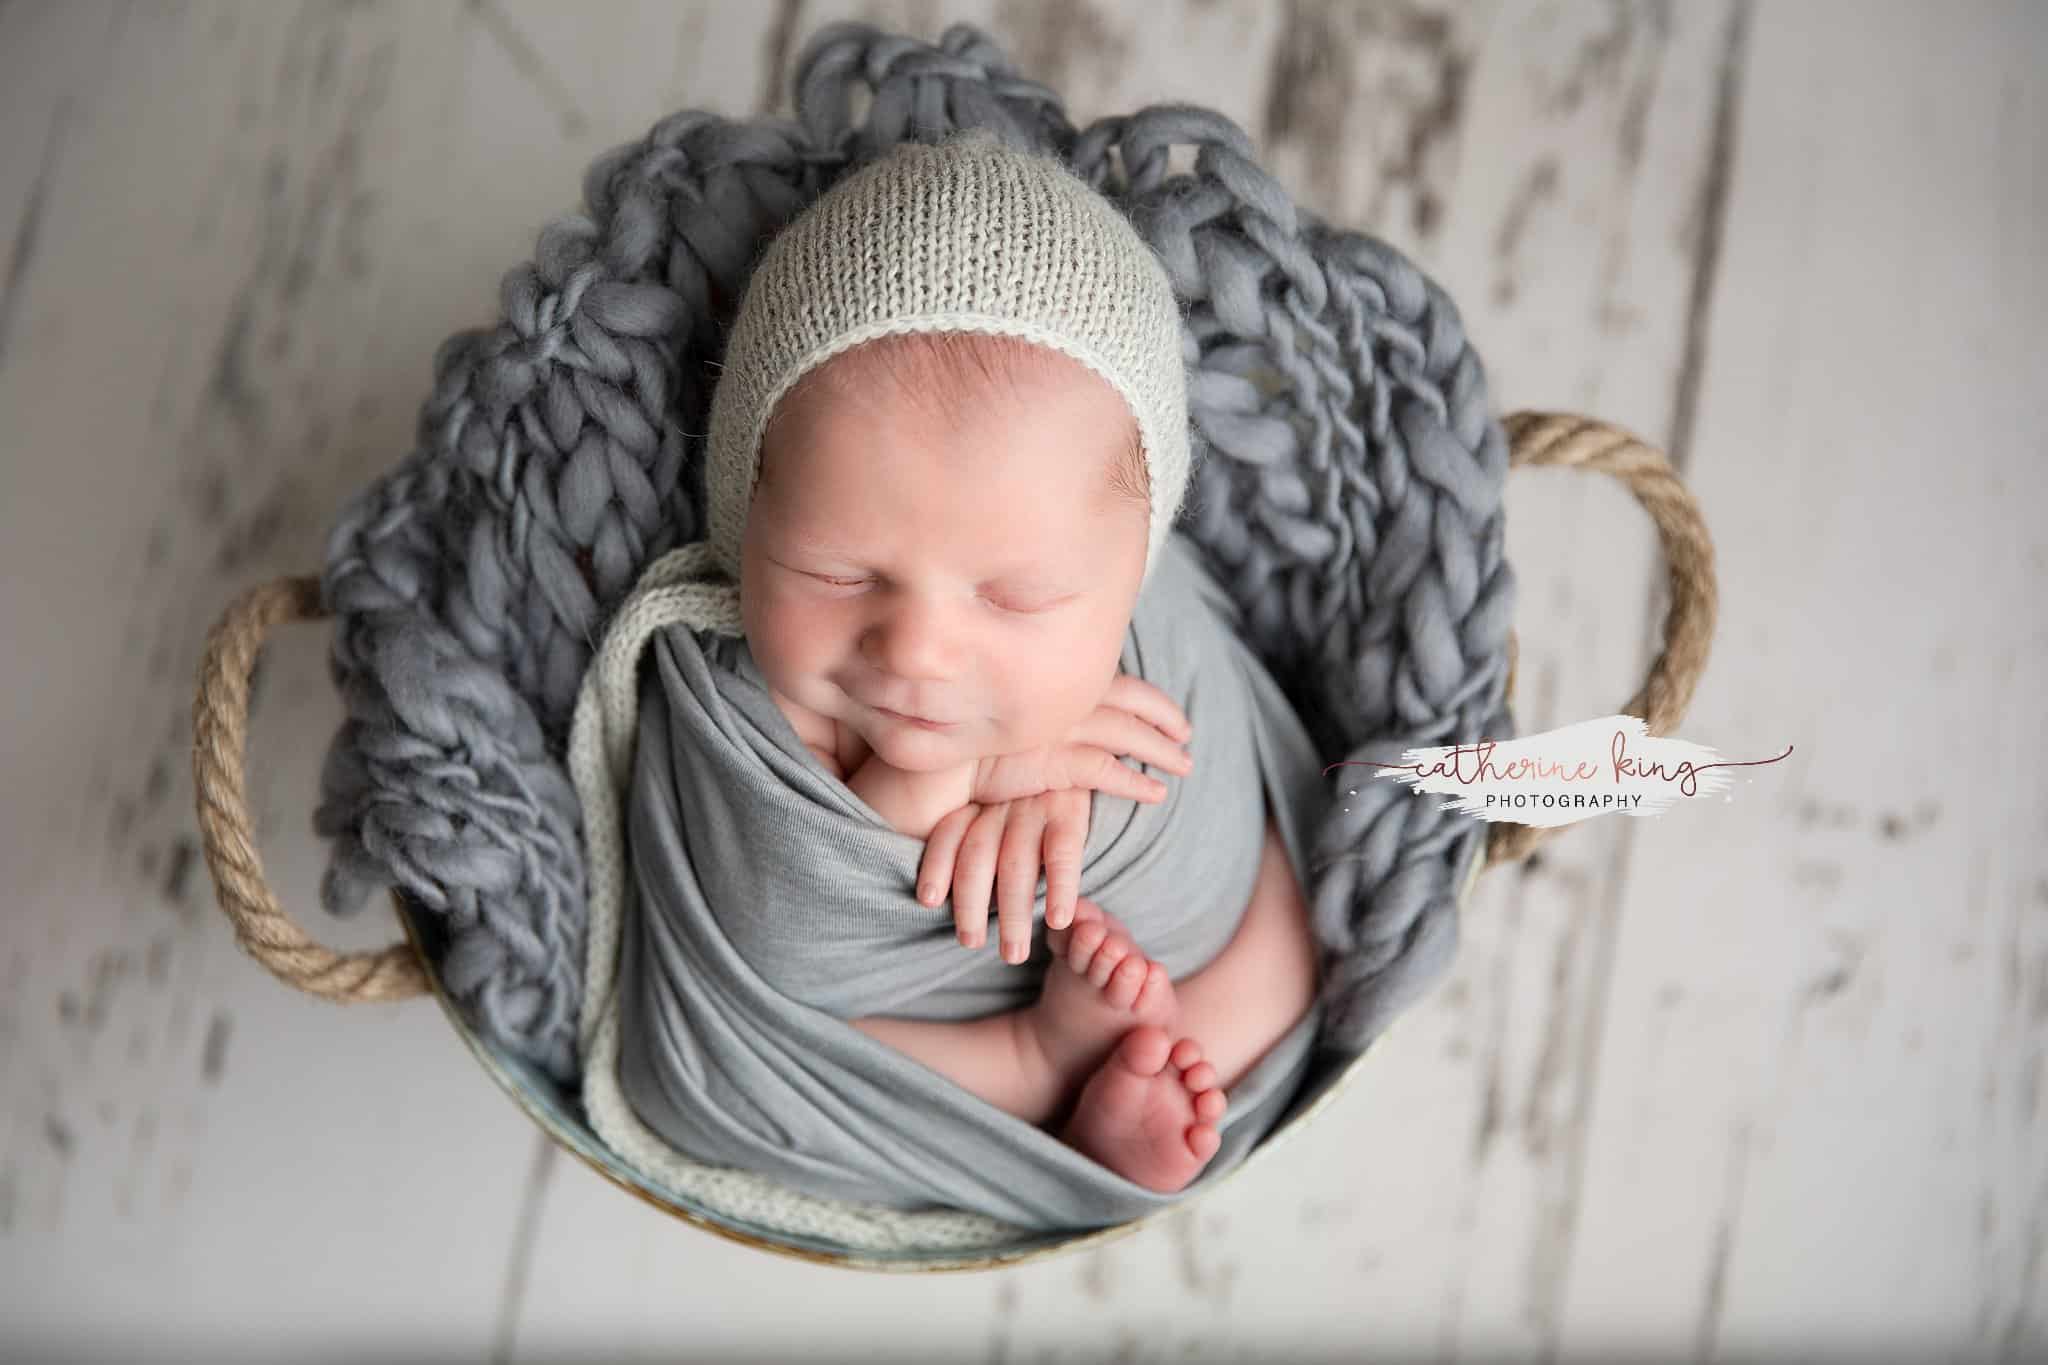 Jaime from Groton CT, Newborn photography